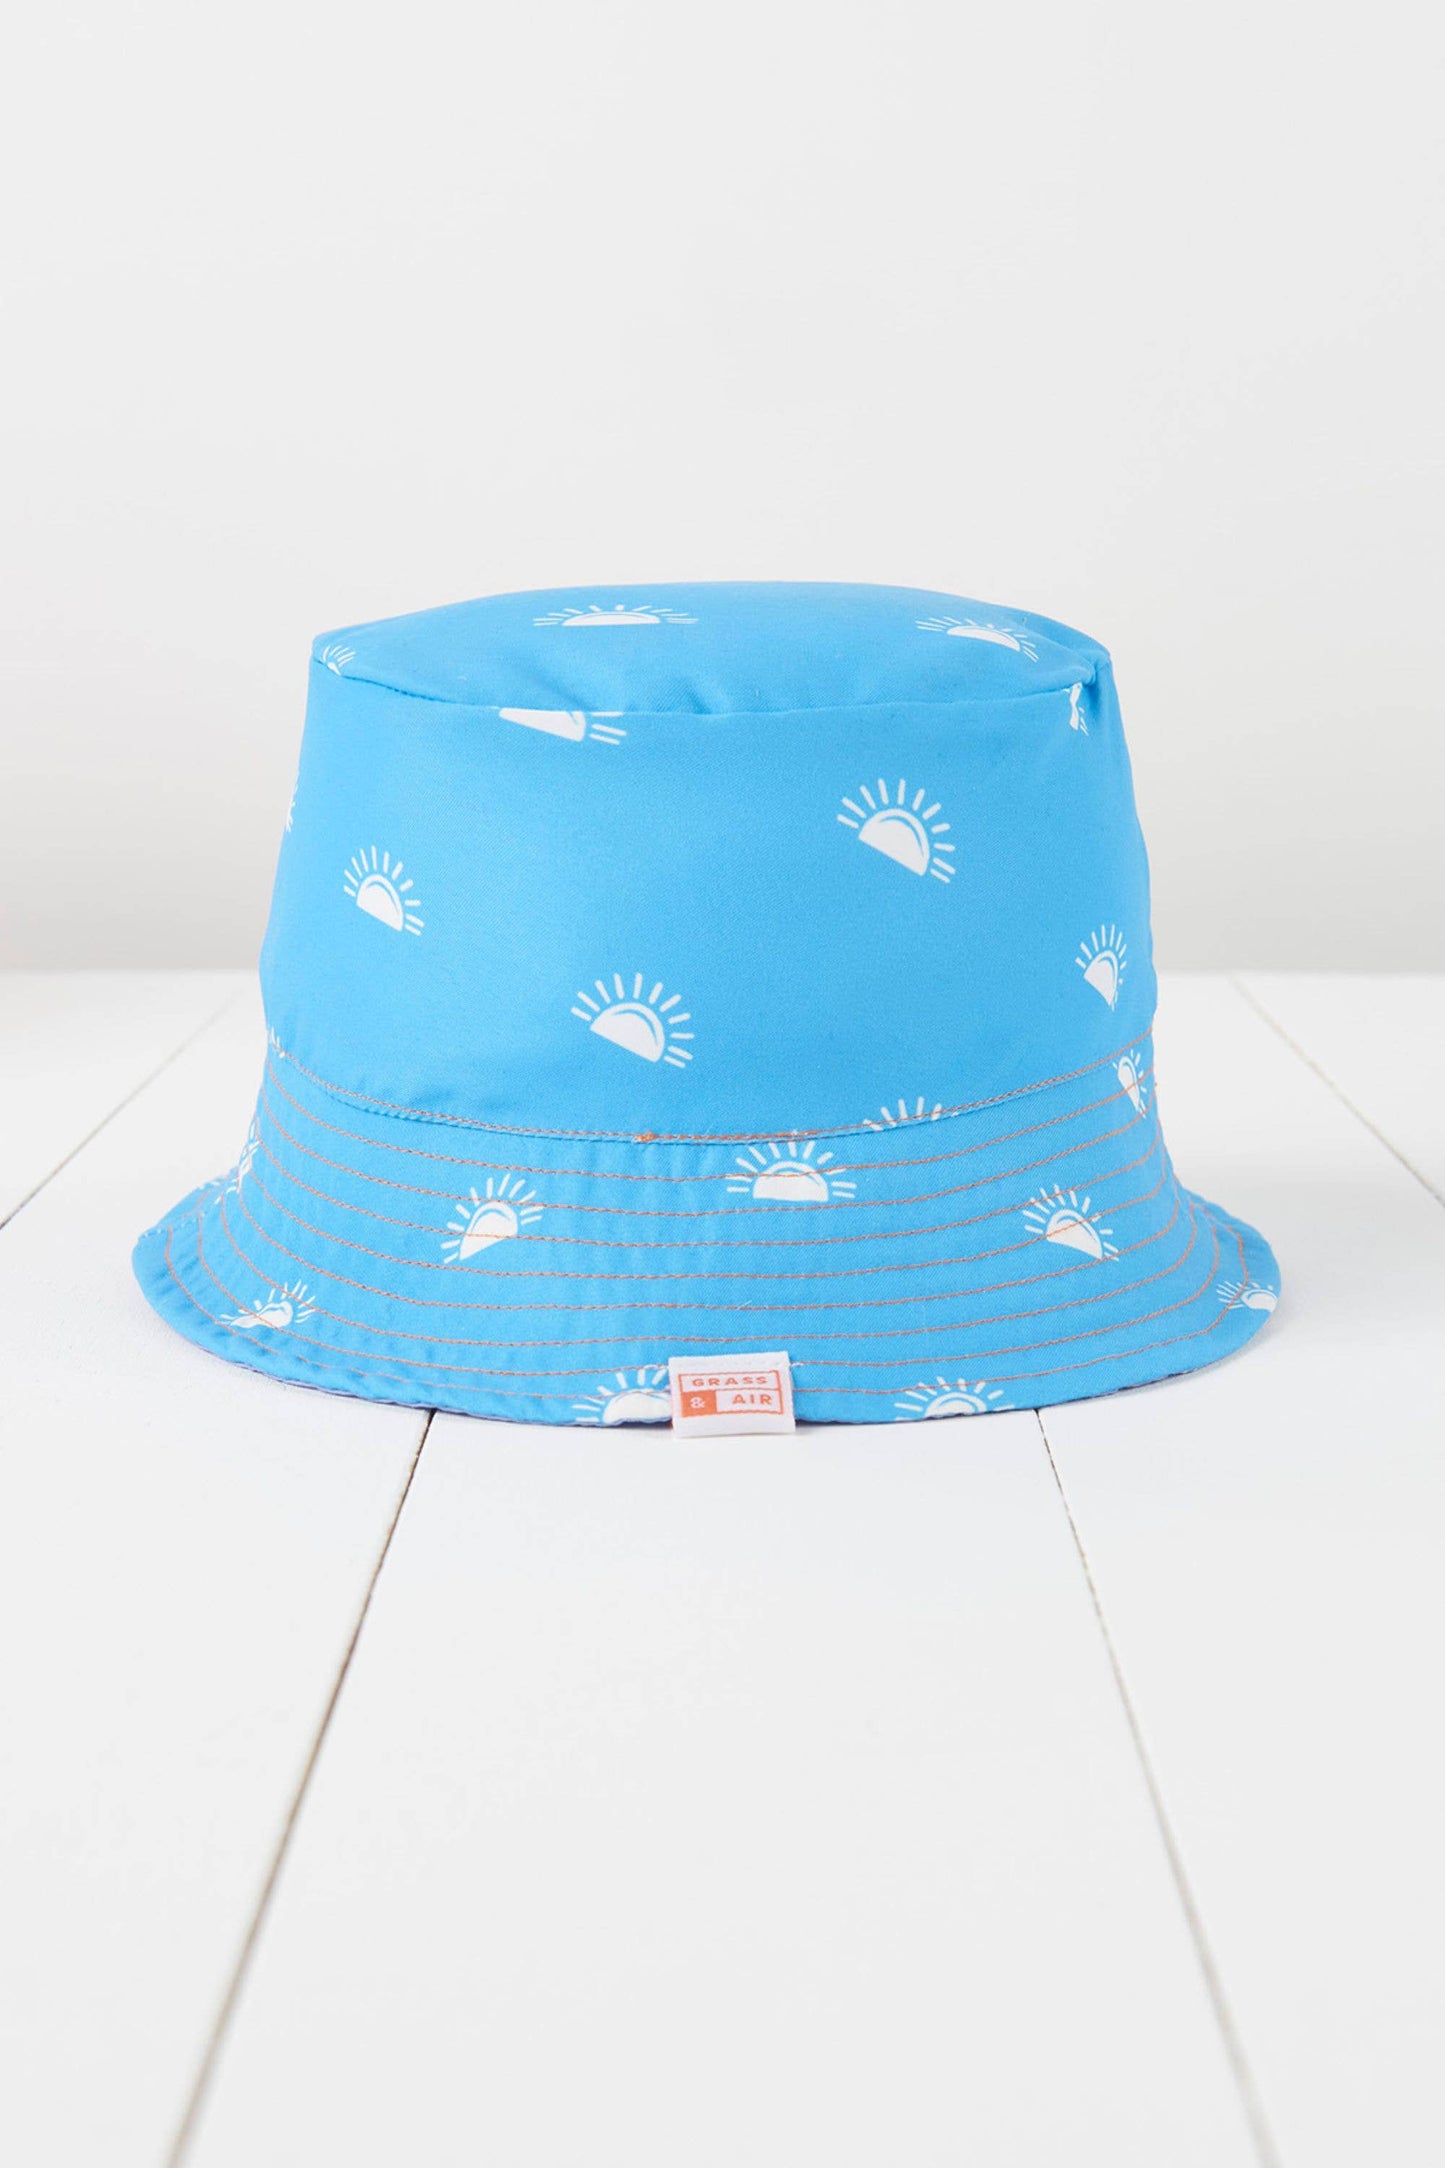 Grass & Air - Cornflower Blue and Lavender Reversible Sun Hat